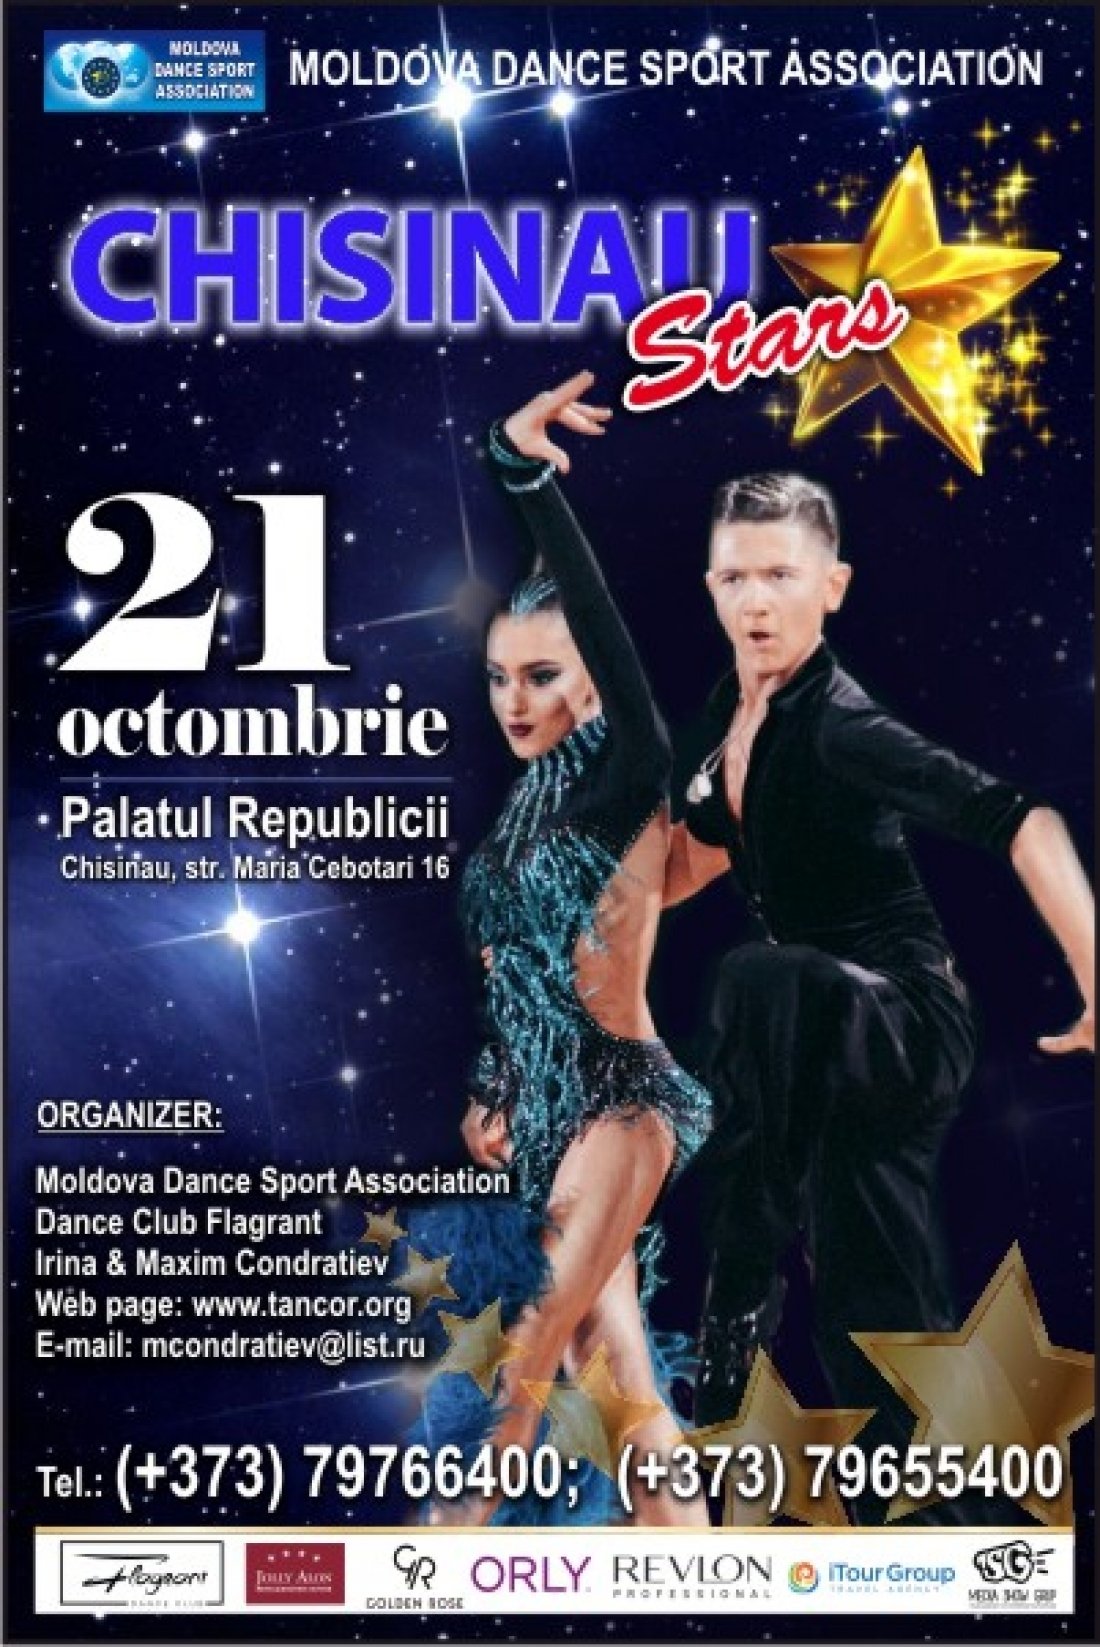 21 octombrie 09:00-18:00 Chisinau Stars 2018